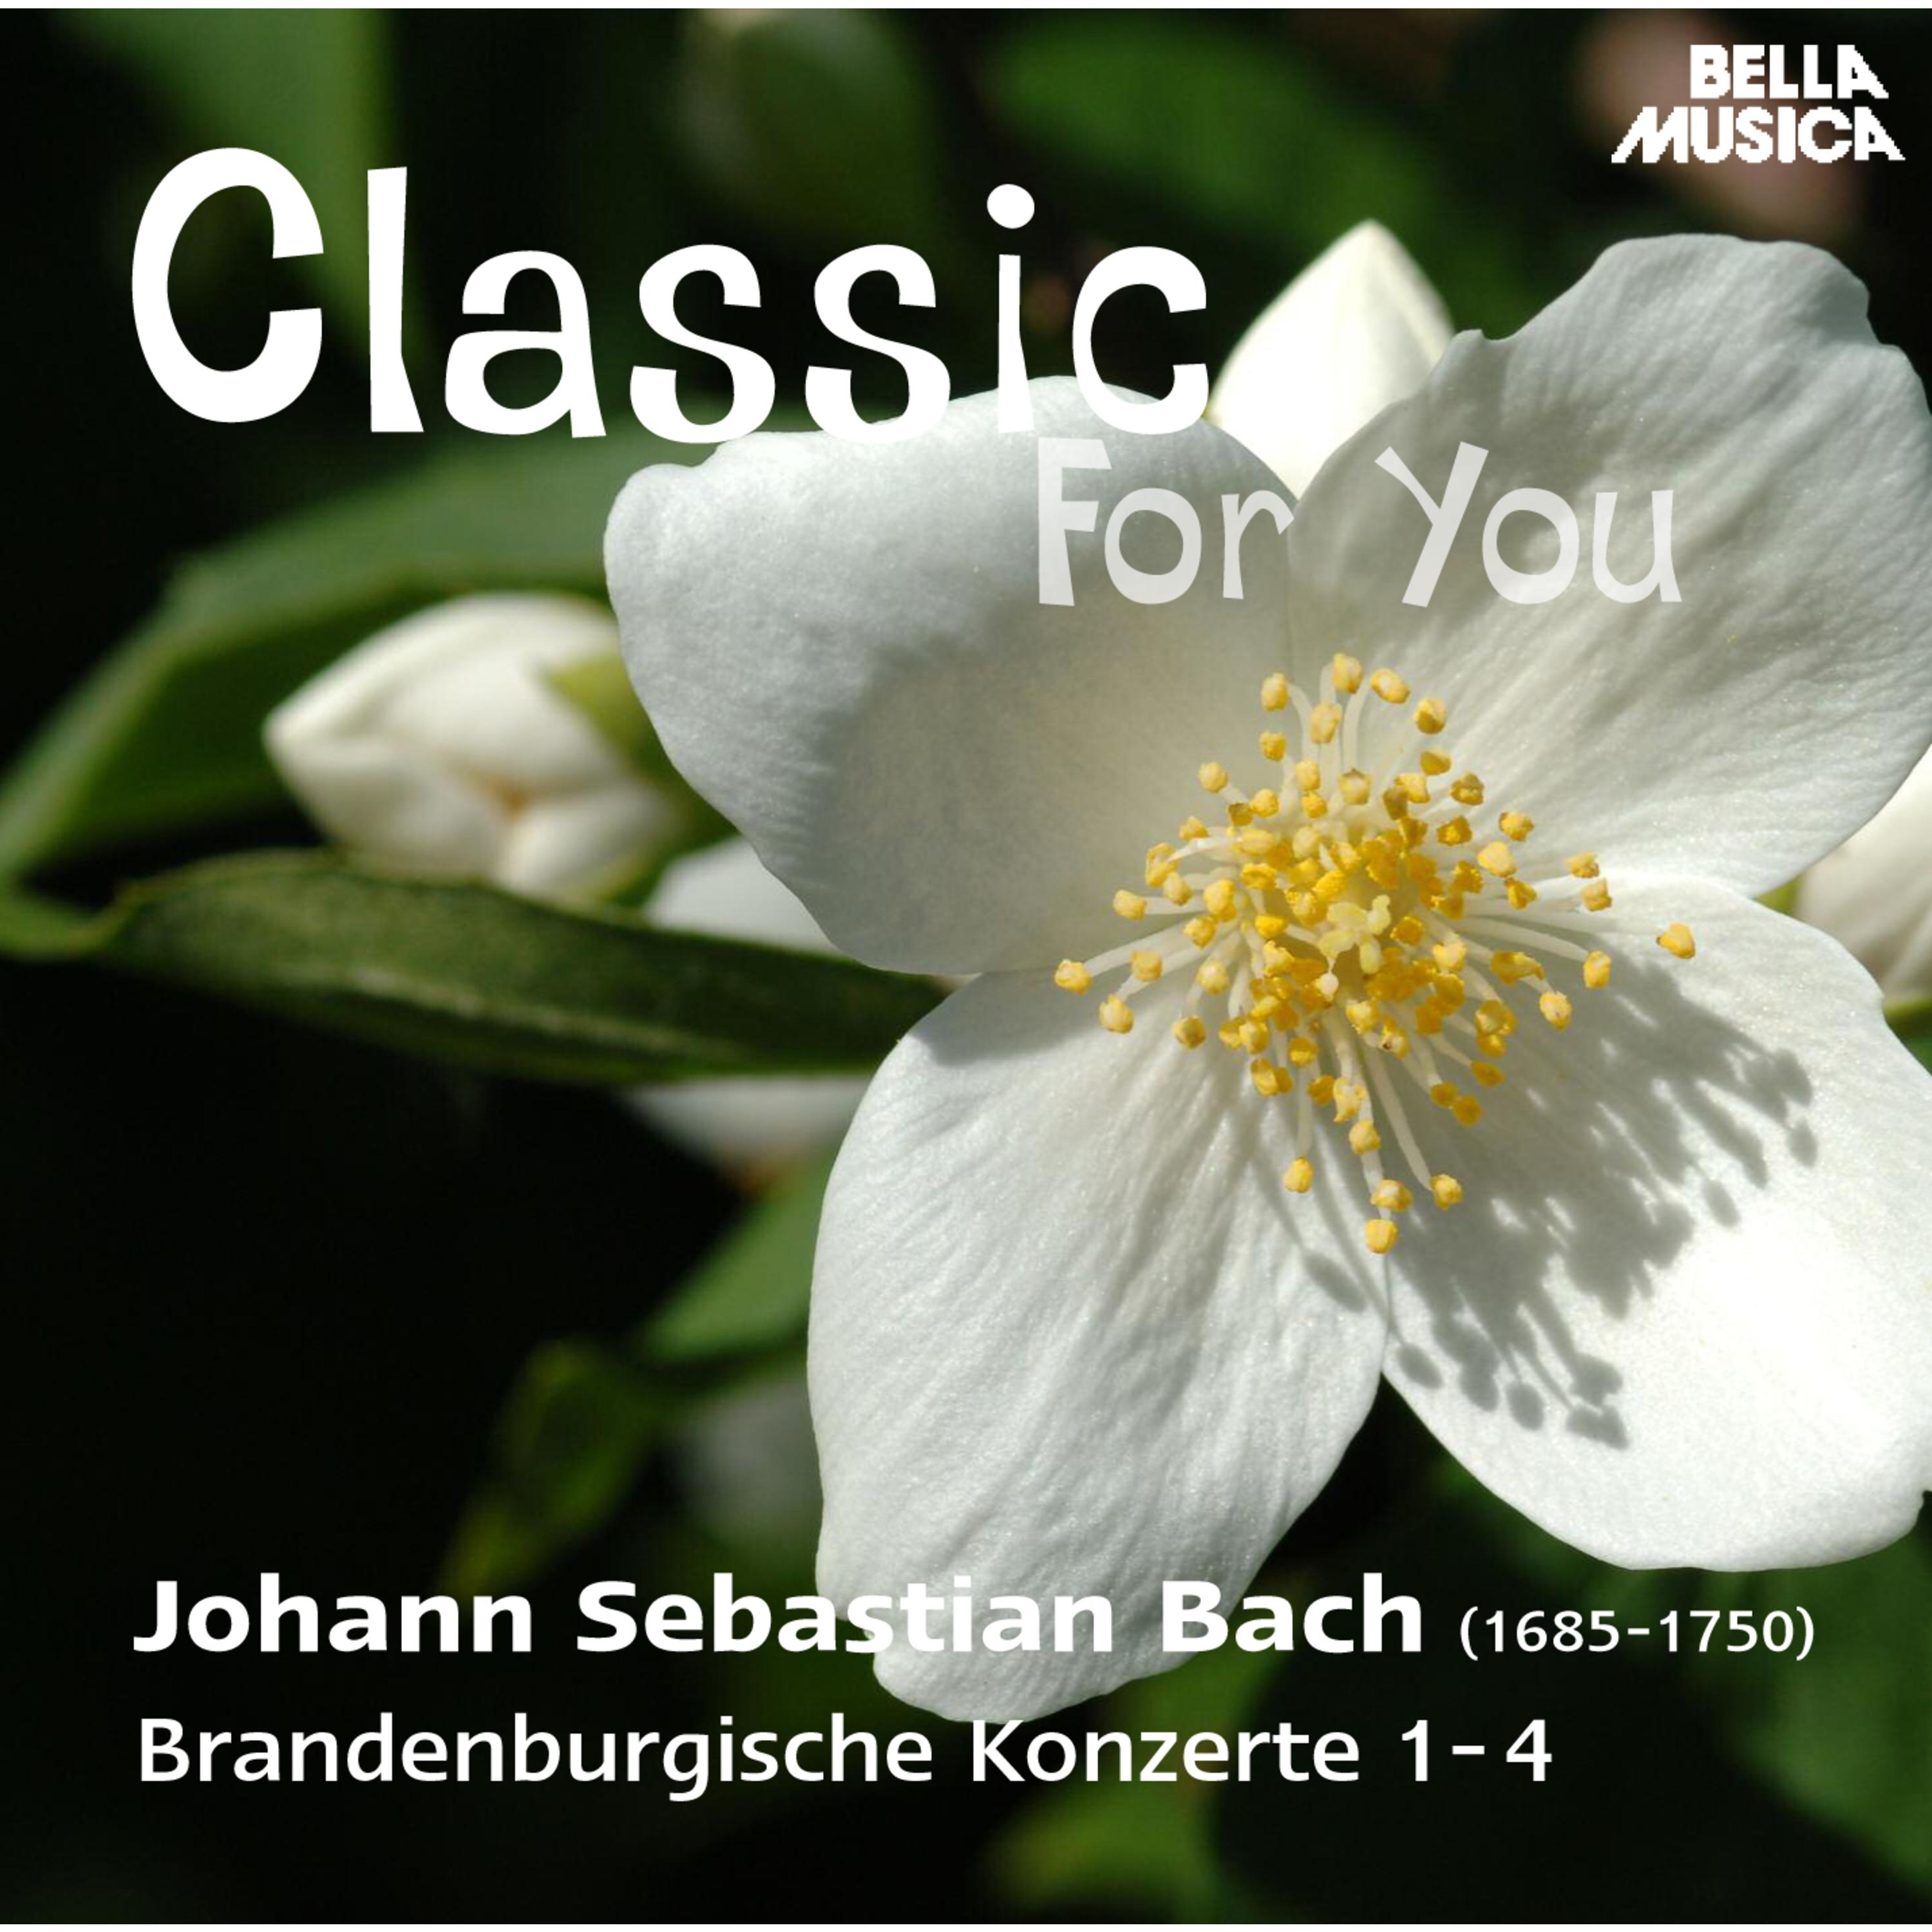 Brandenburgisches Konzert in G Major, BWV 1048, No. 3: III. Allegro